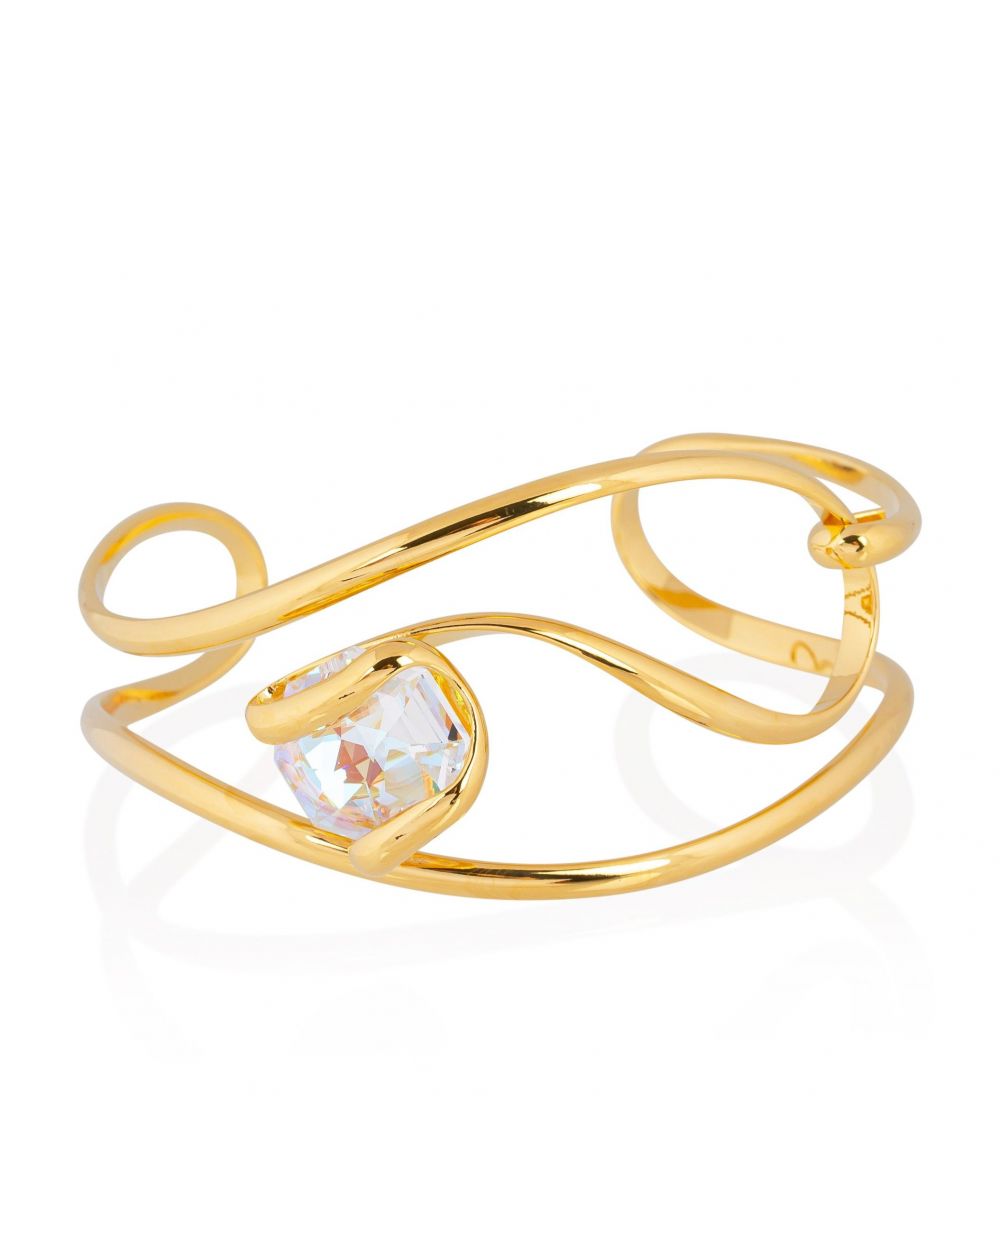 Andrea Marazzini bijoux - Bracelet cristal Swarovski Octagon AB BR5